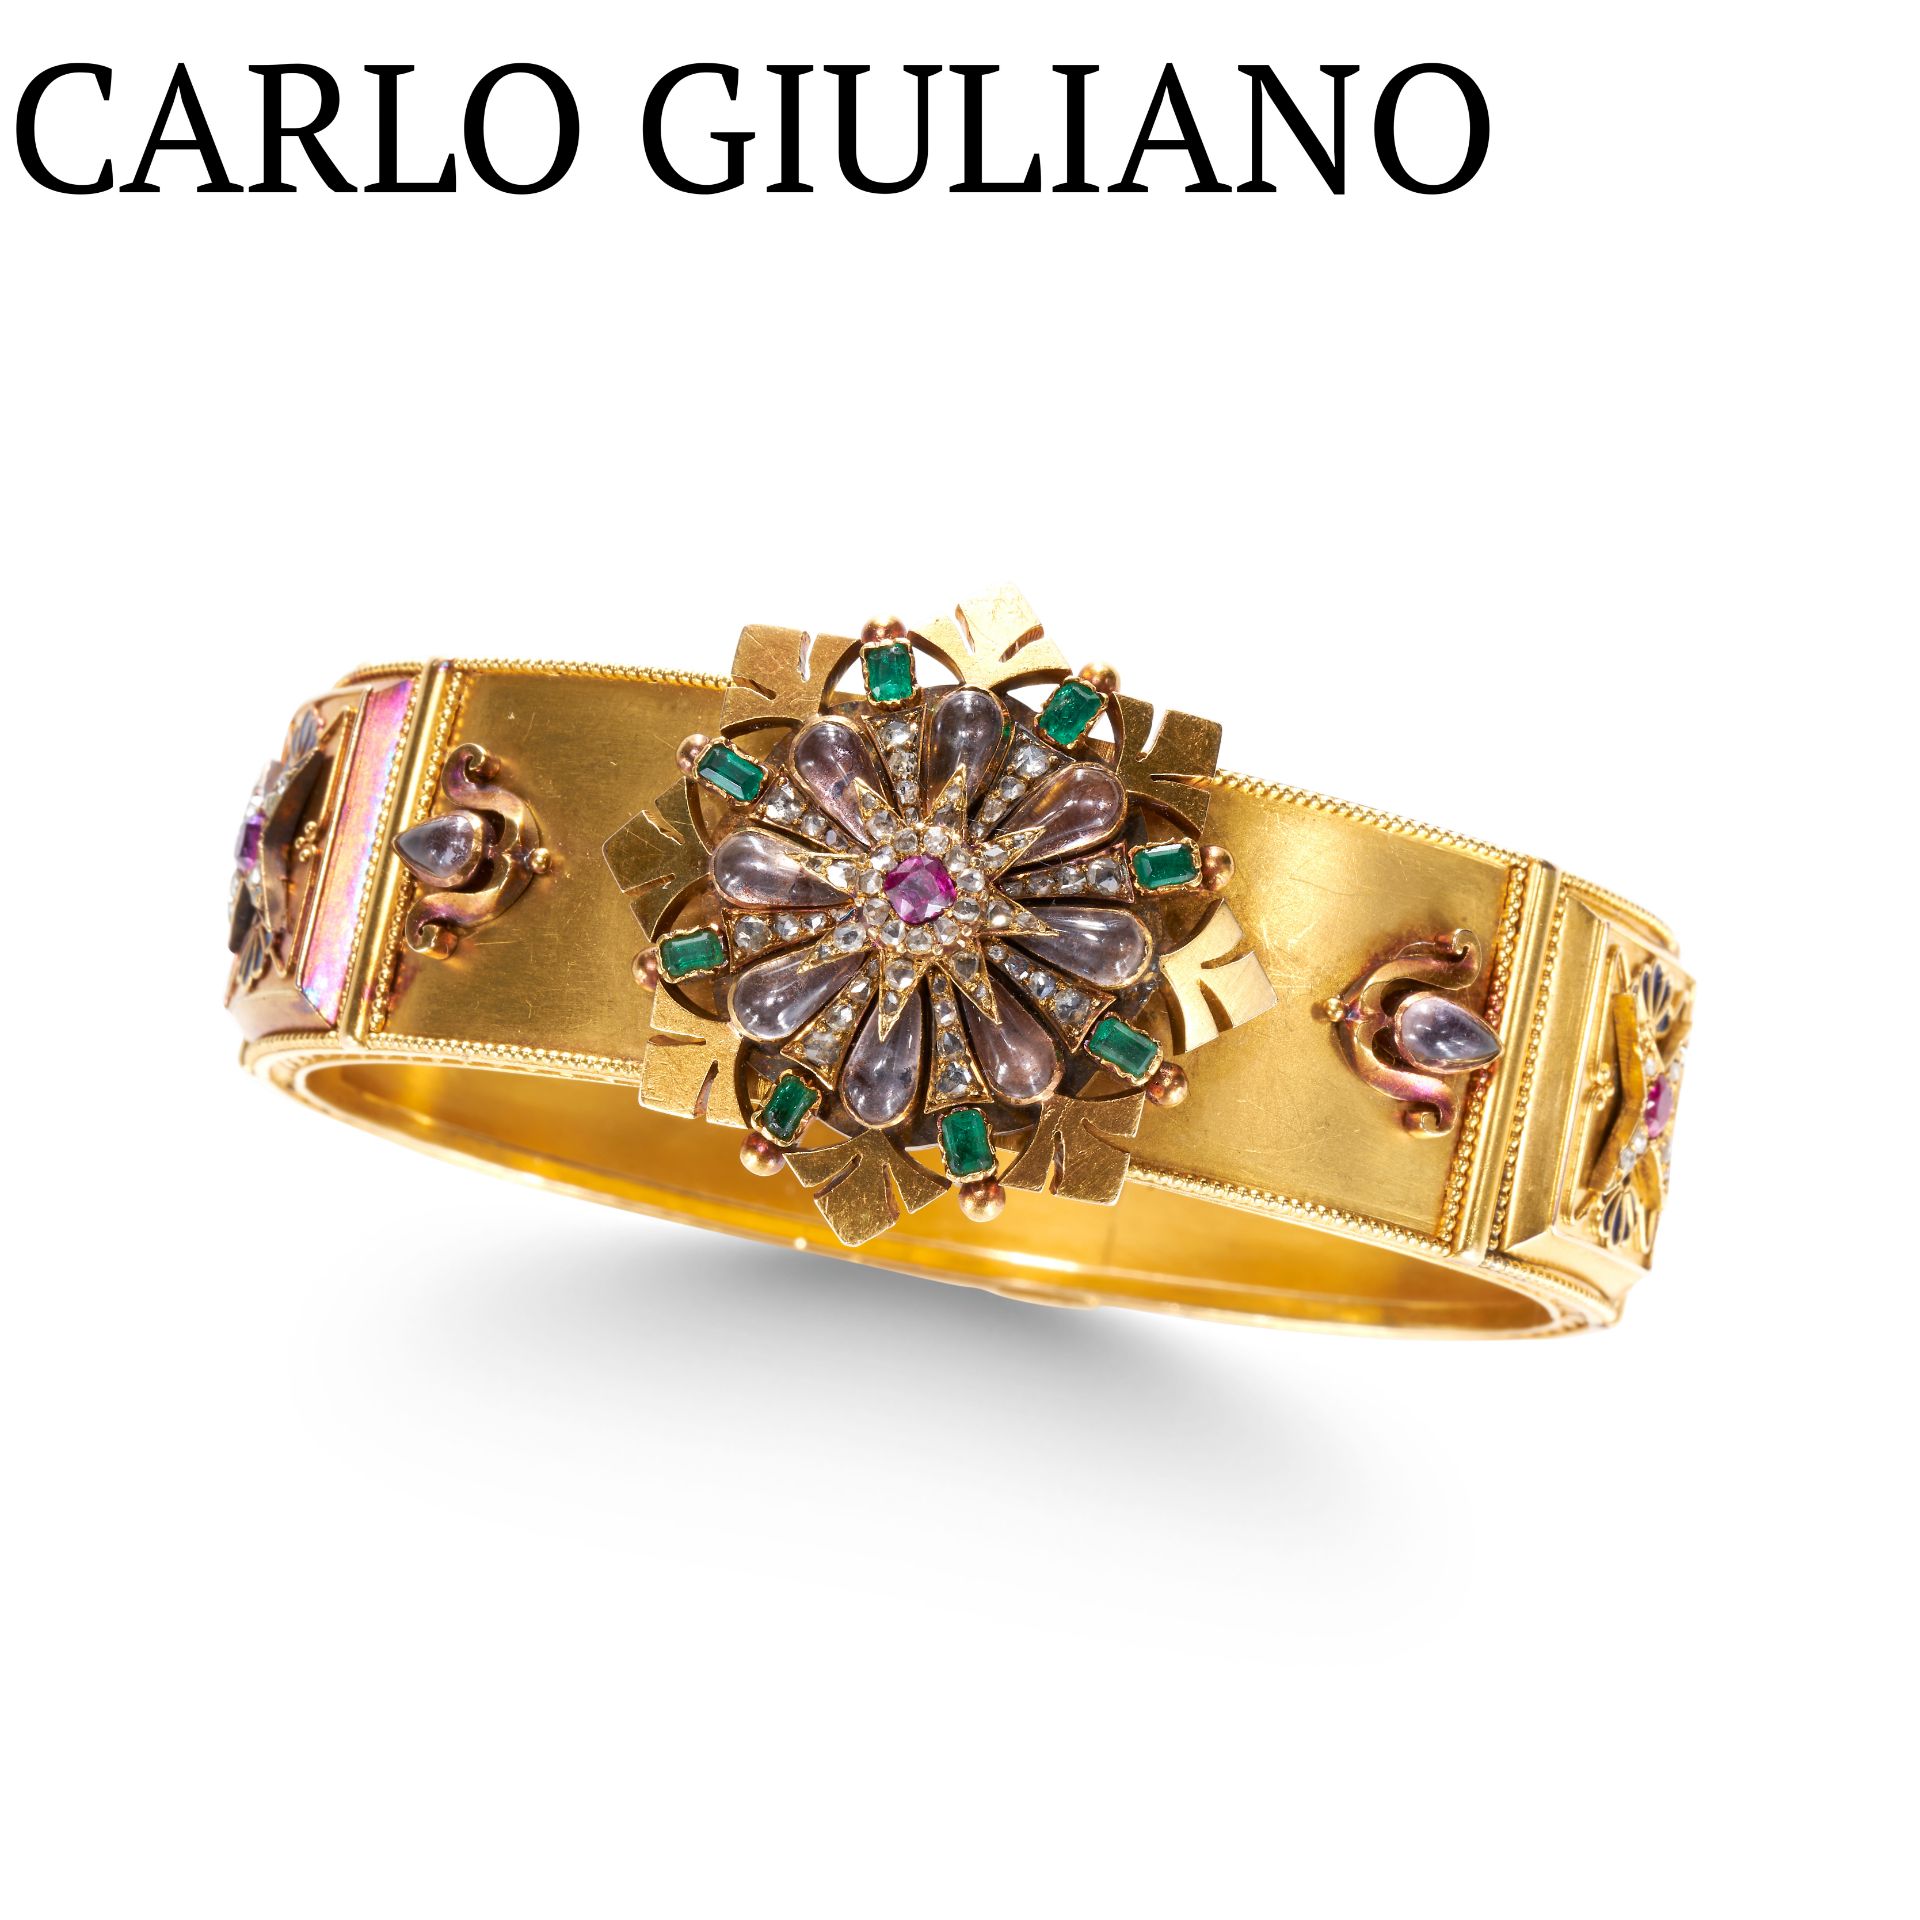 CARLO GIULIANO, AN IMPORTANT RUBY, EMERALD DIAMOND, MOONSTONE AND ENAMEL BANGLE, IN YELLOW GOLD.